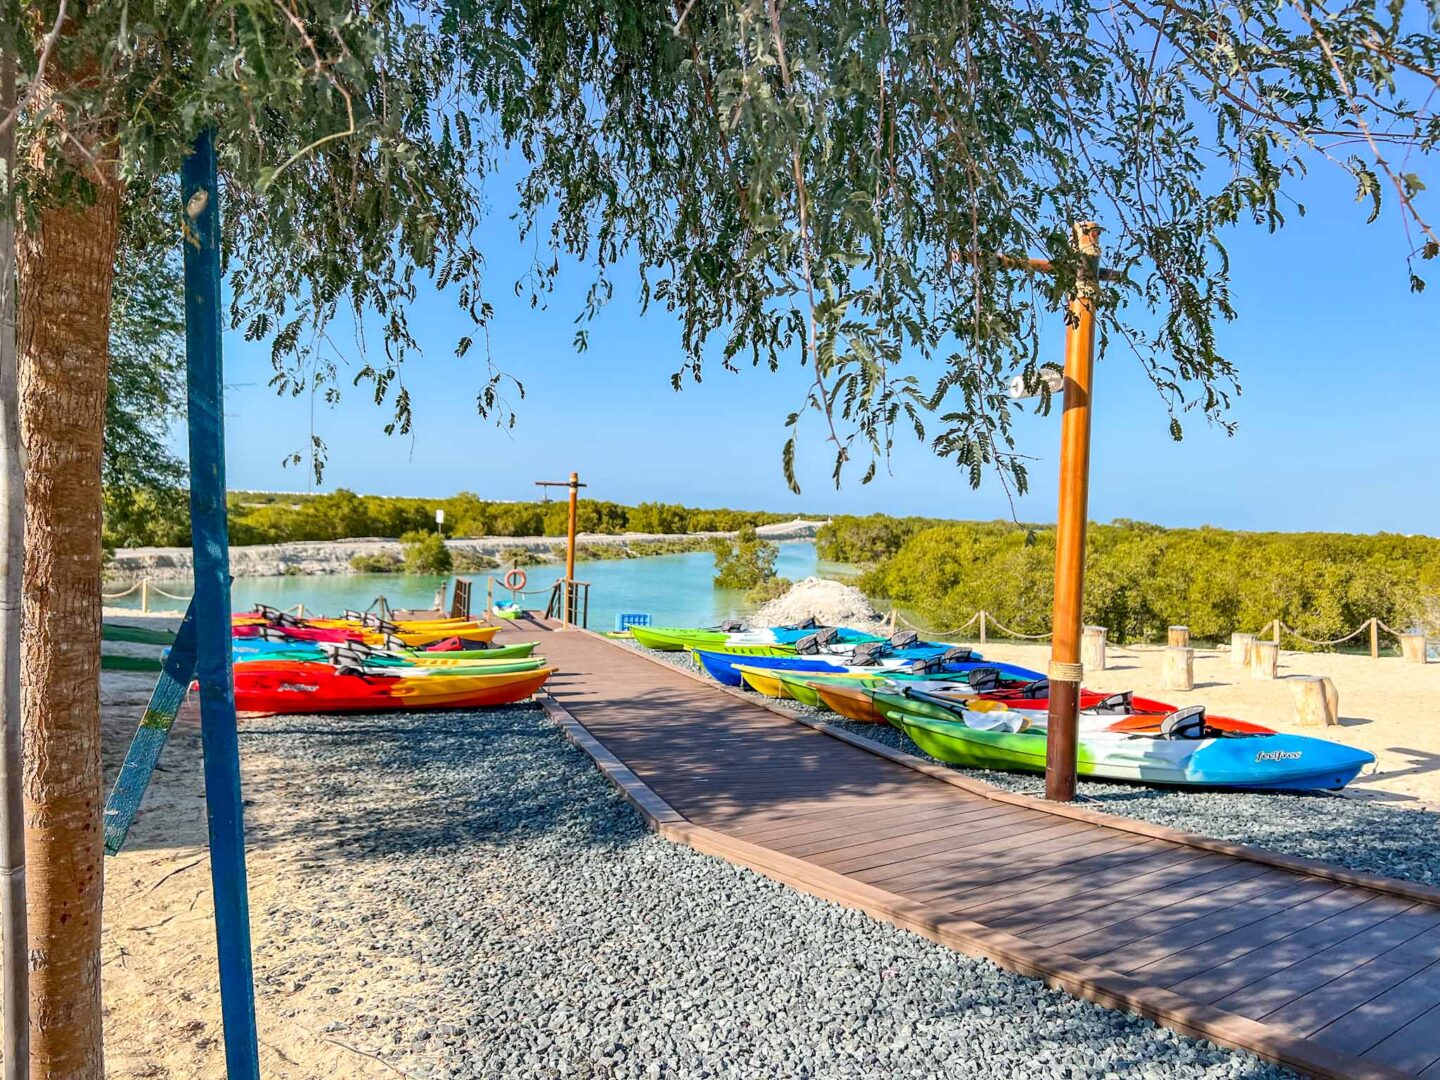 Things to do in Abu Dhabi, kayak shop at Jubail Mangrove Park